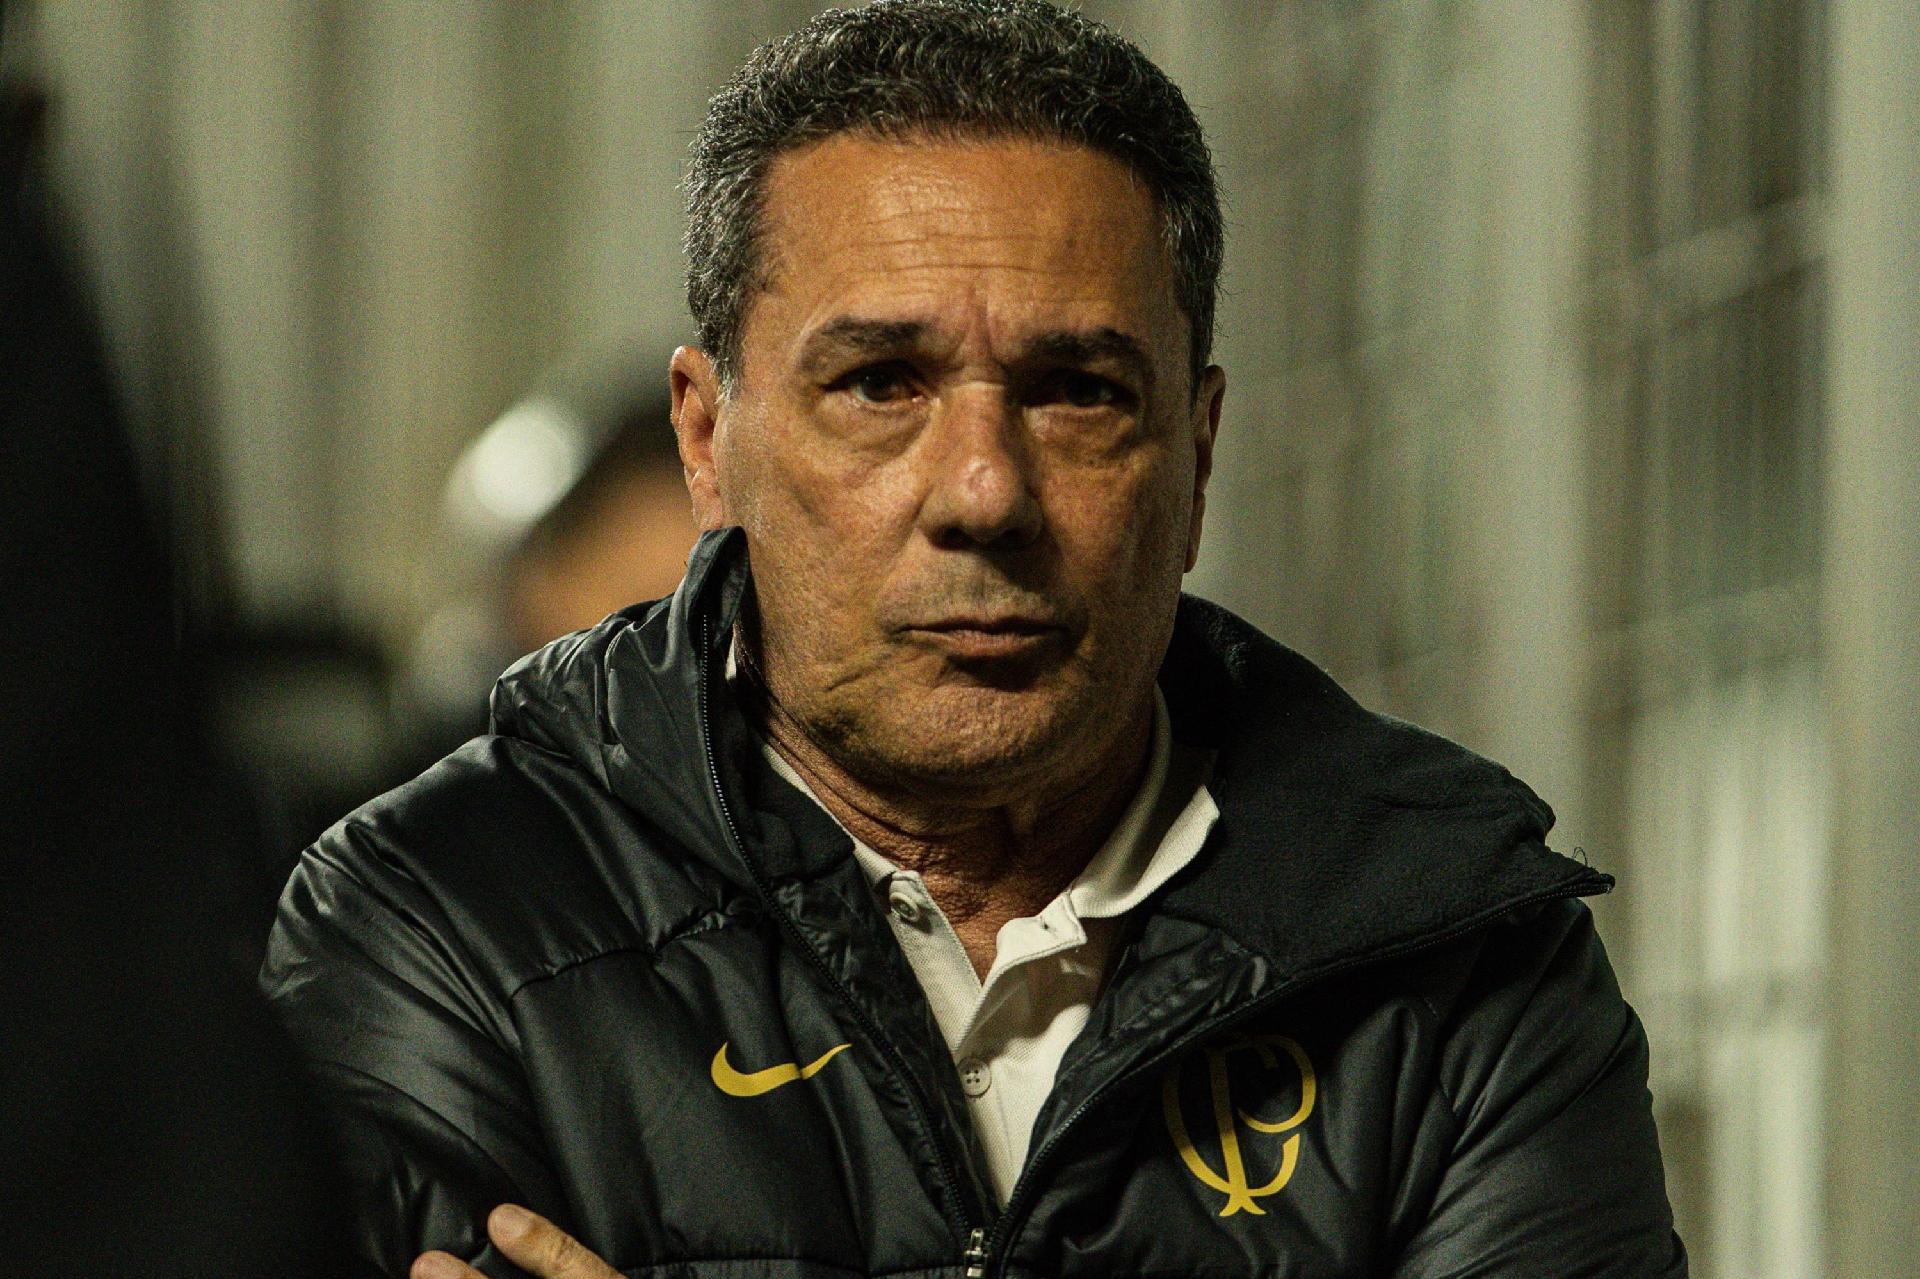 Vanderlei Luxemburgo is fired from Corinthians - Calcio Deal